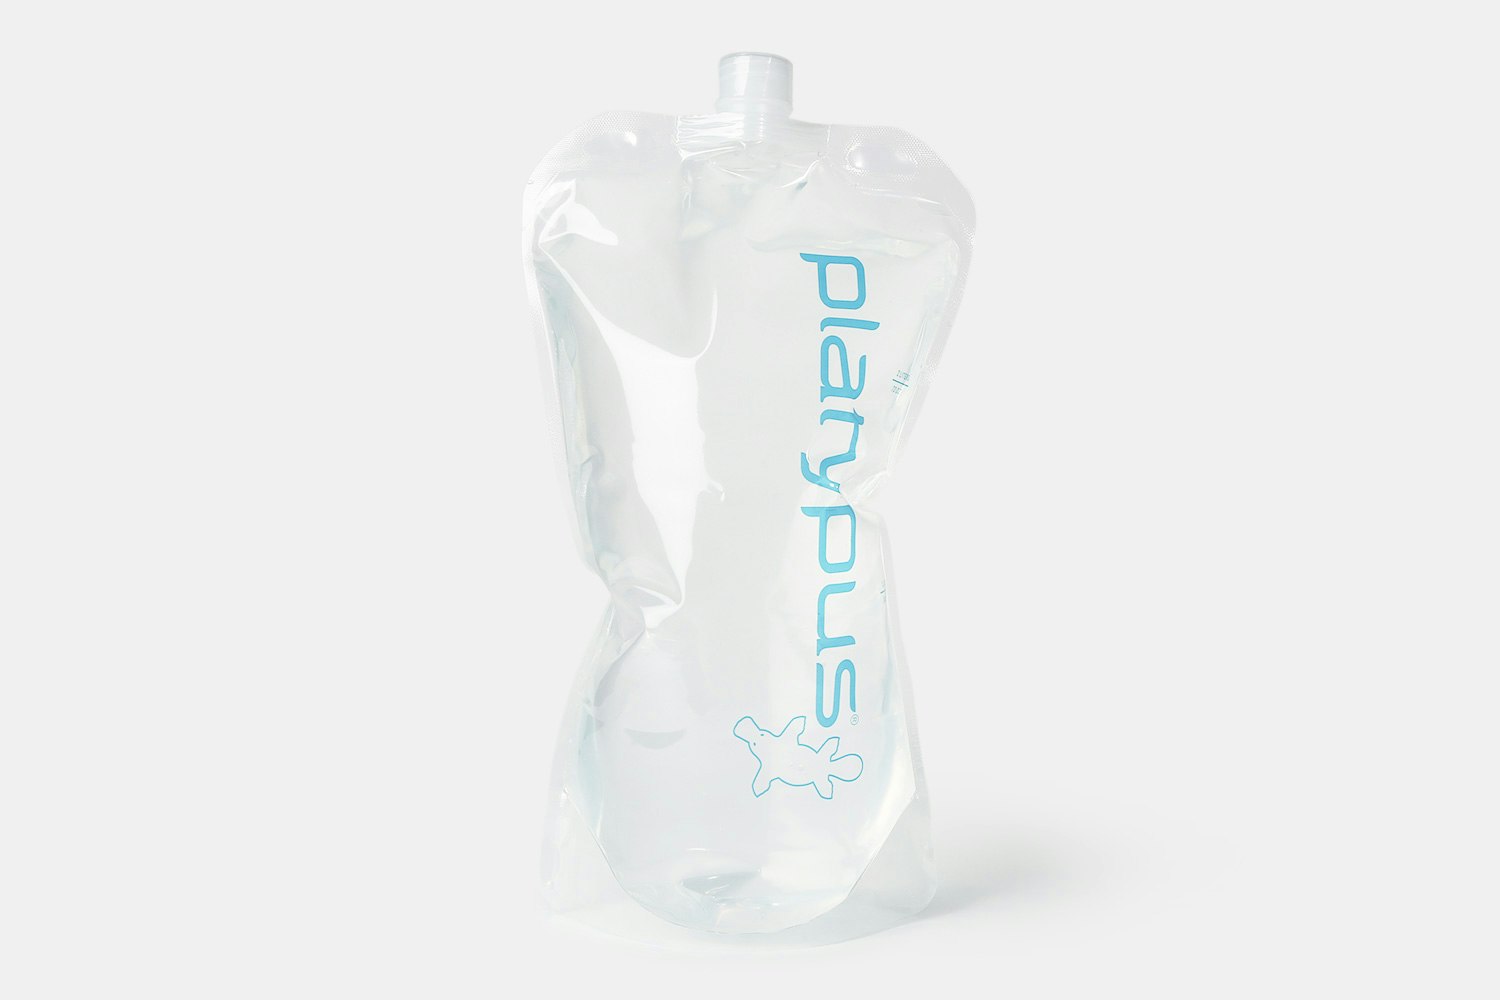 platypus water bottle shower